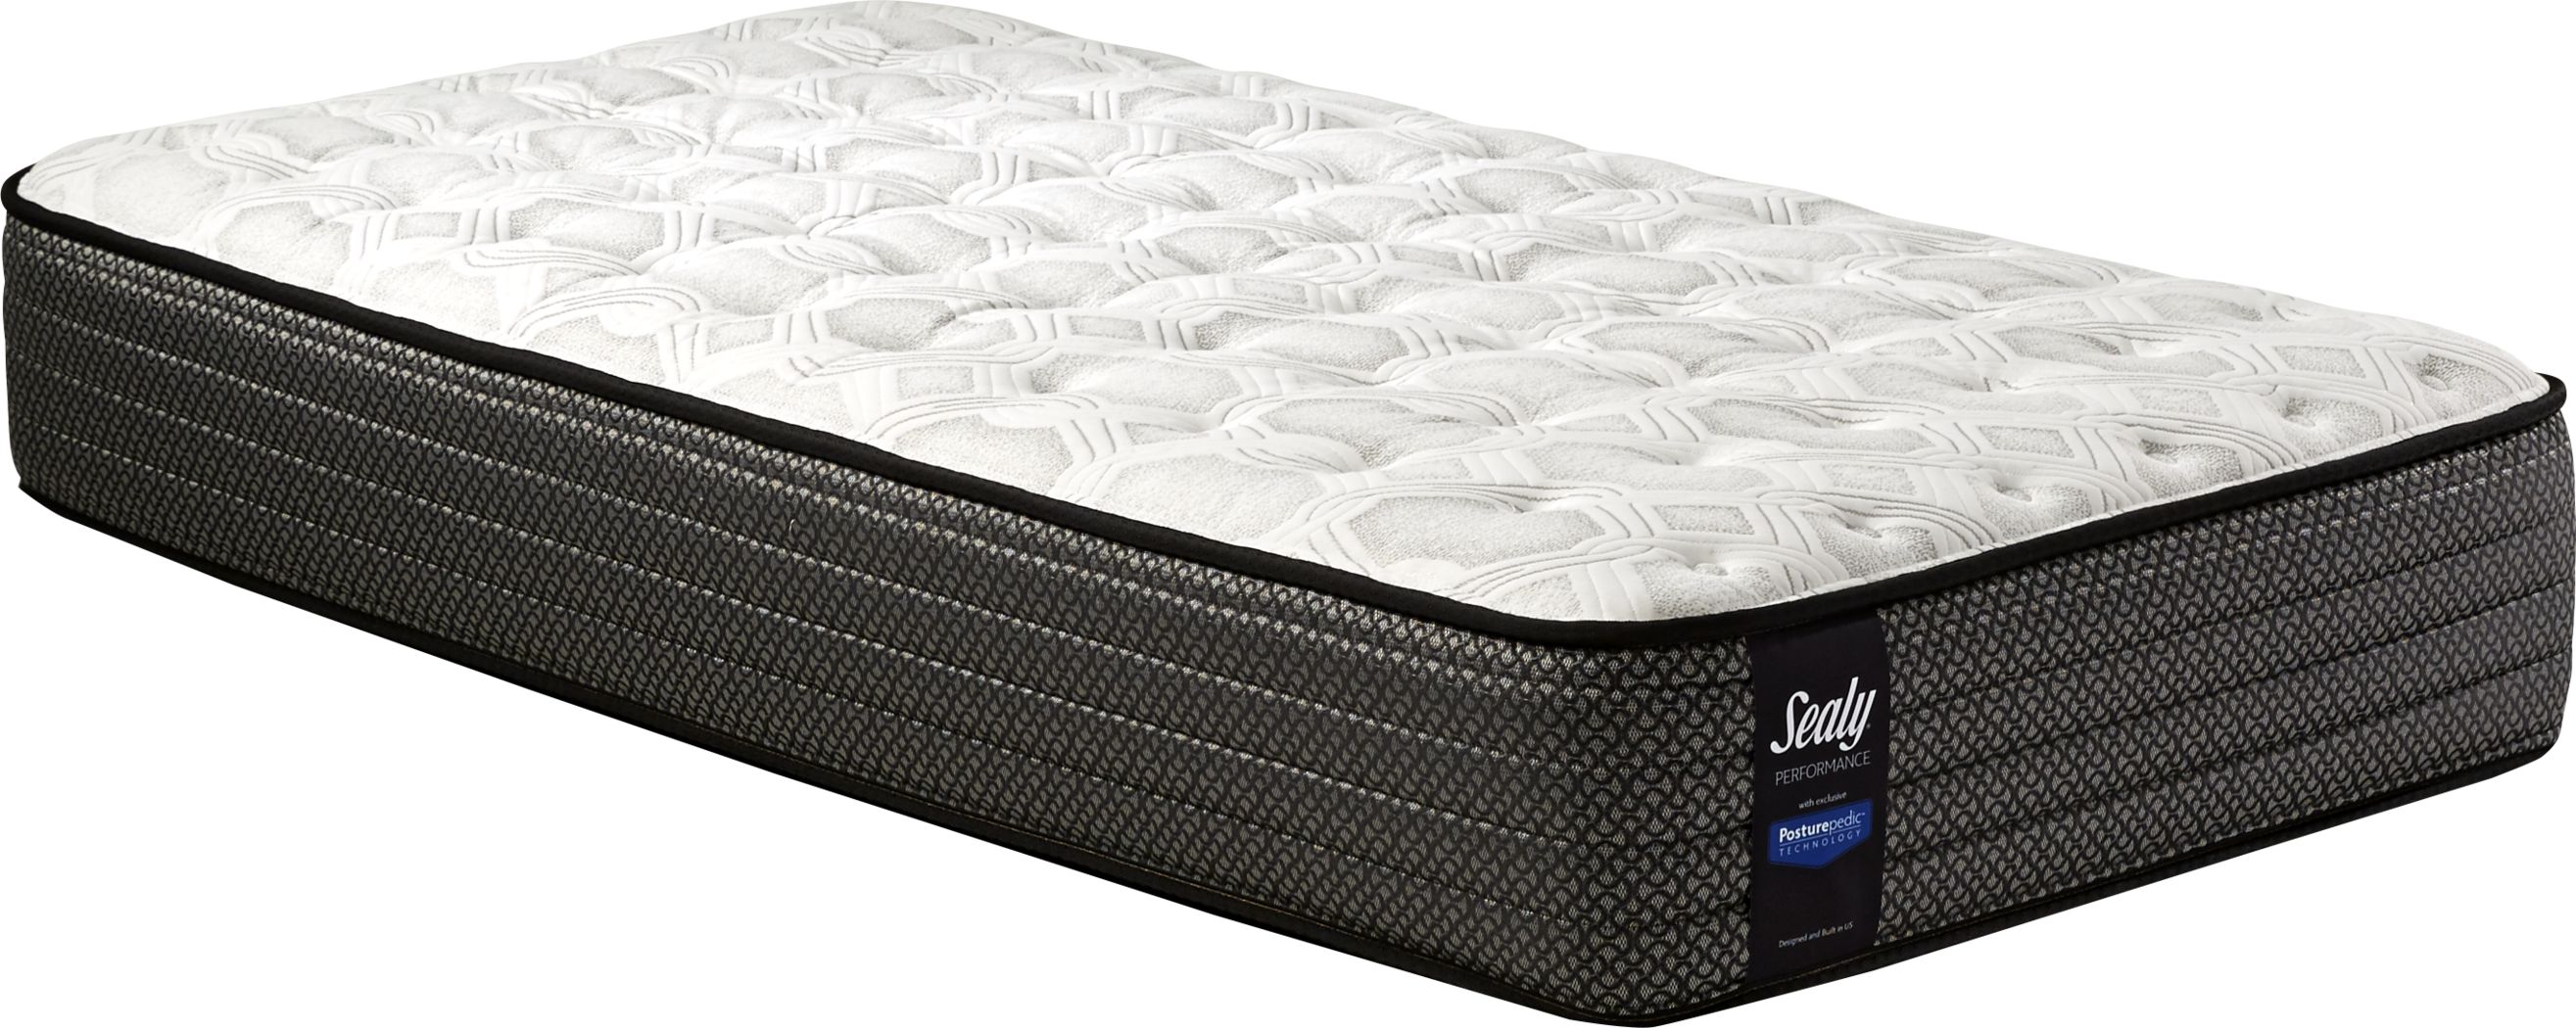 sealy performance davlin plush eurotop mattress